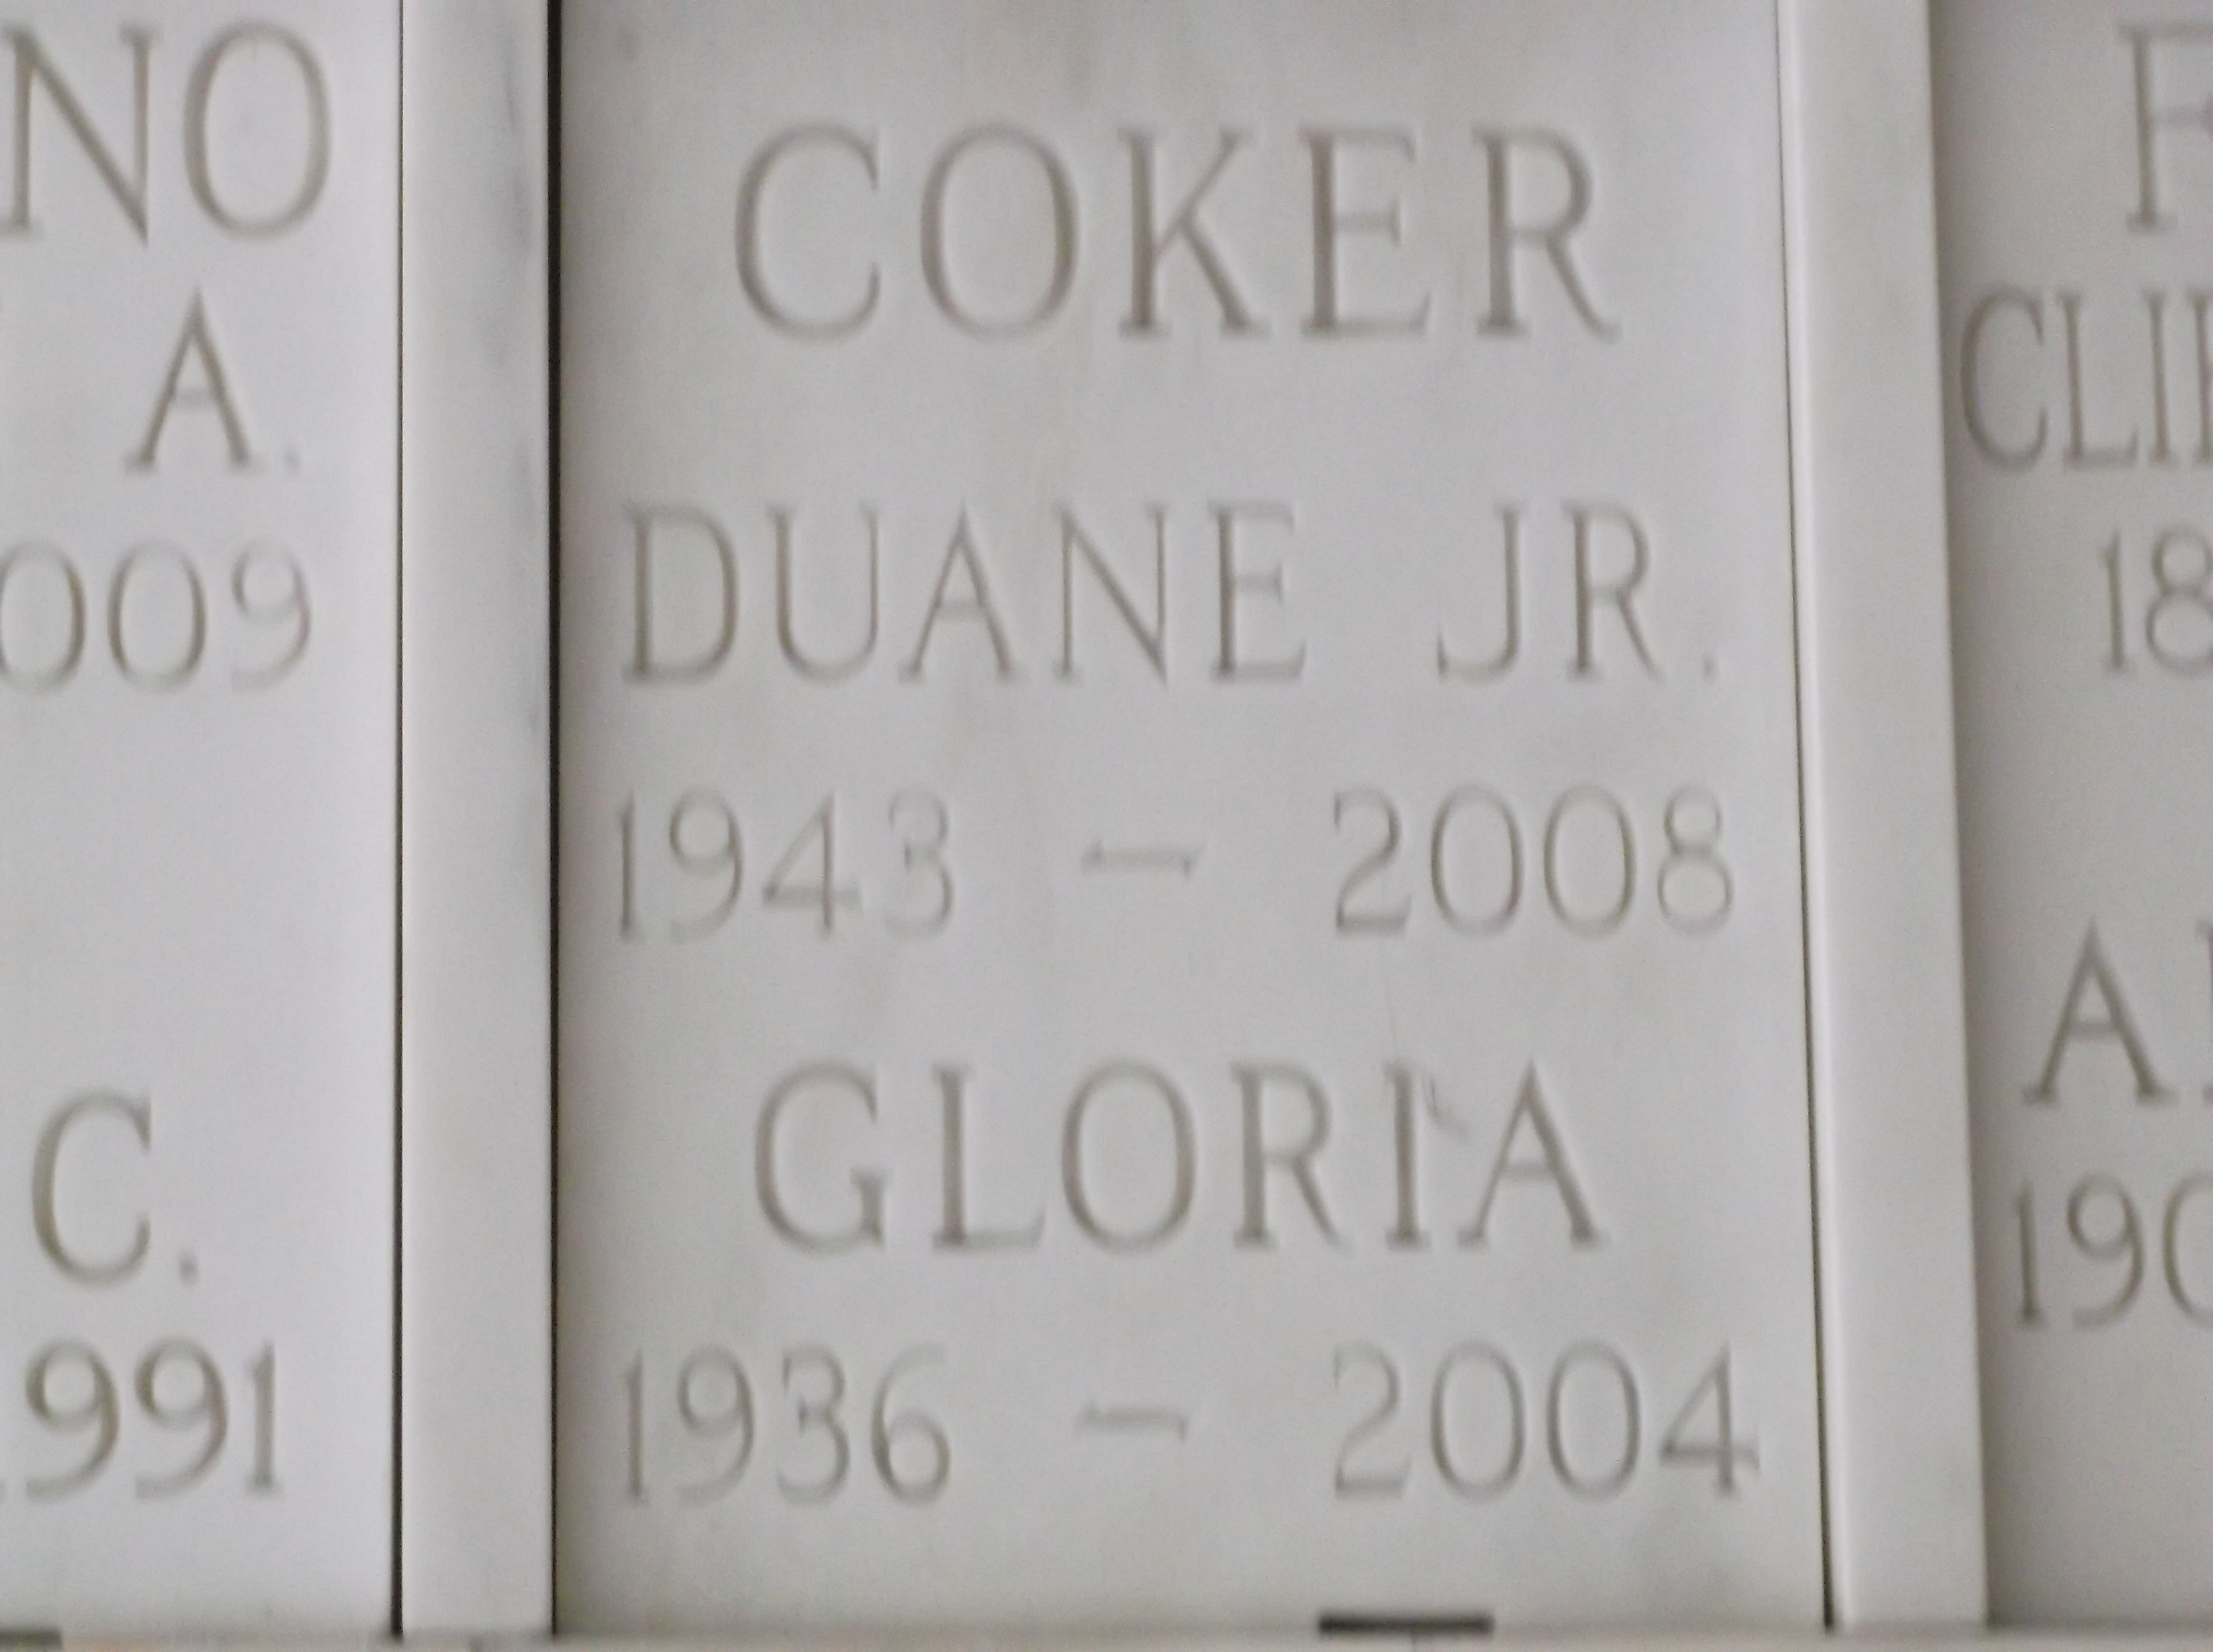 Duane Coker, Jr